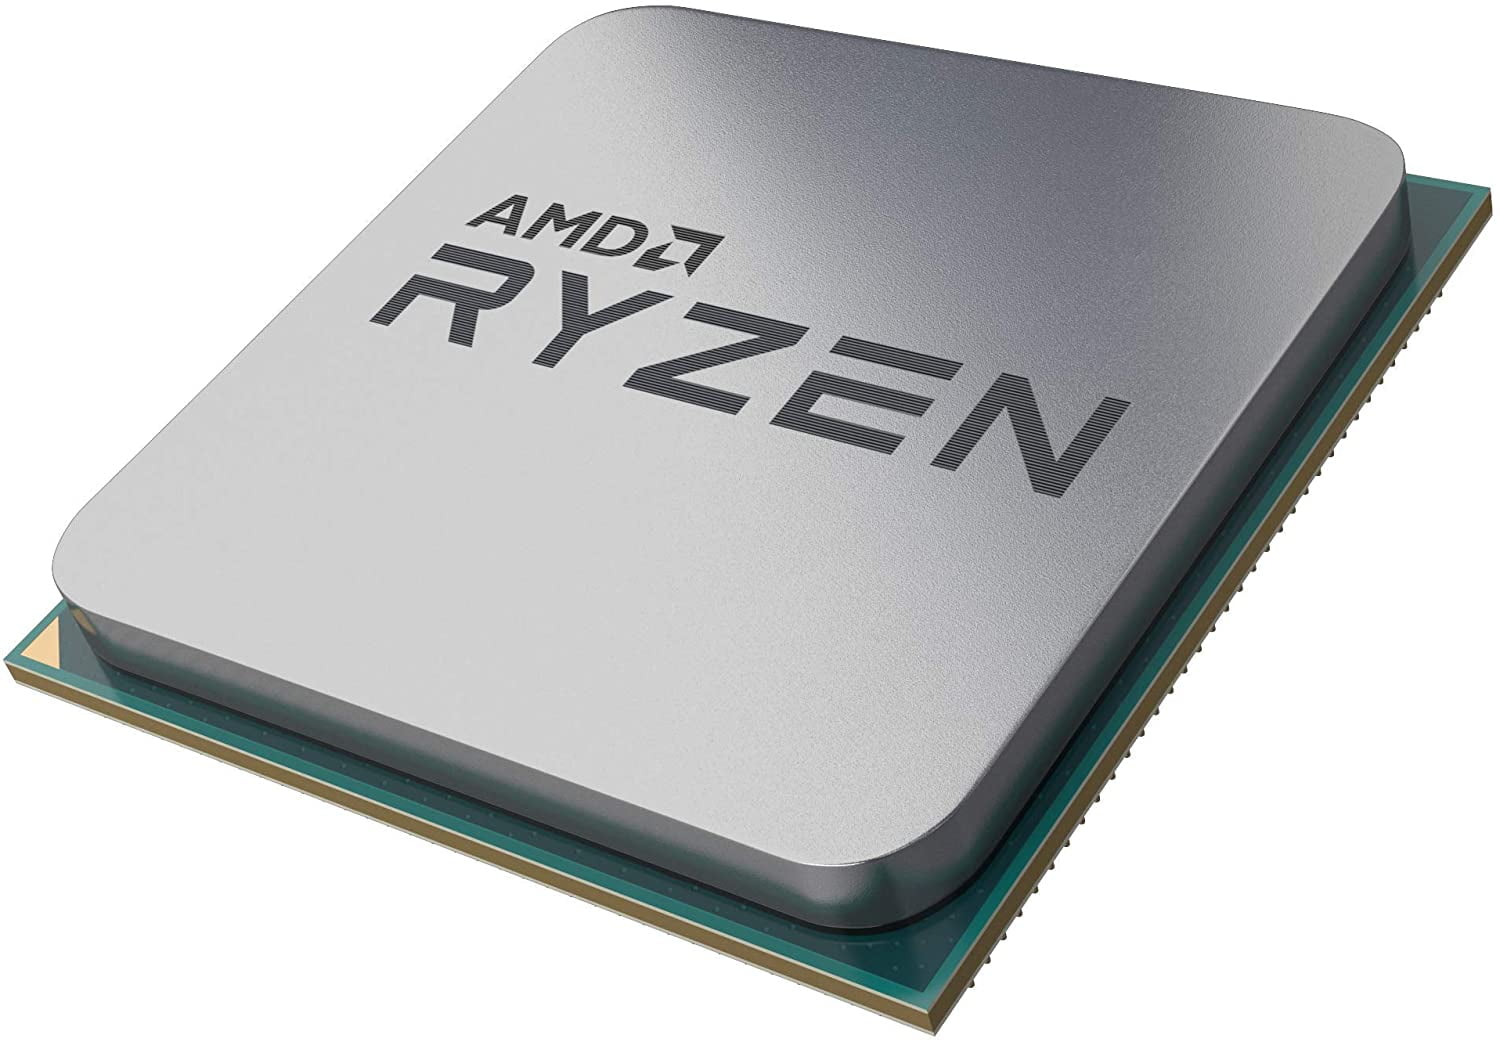 Ryzen 6-Core 12-Thread Unlocked Desktop Processor - Walmart.com